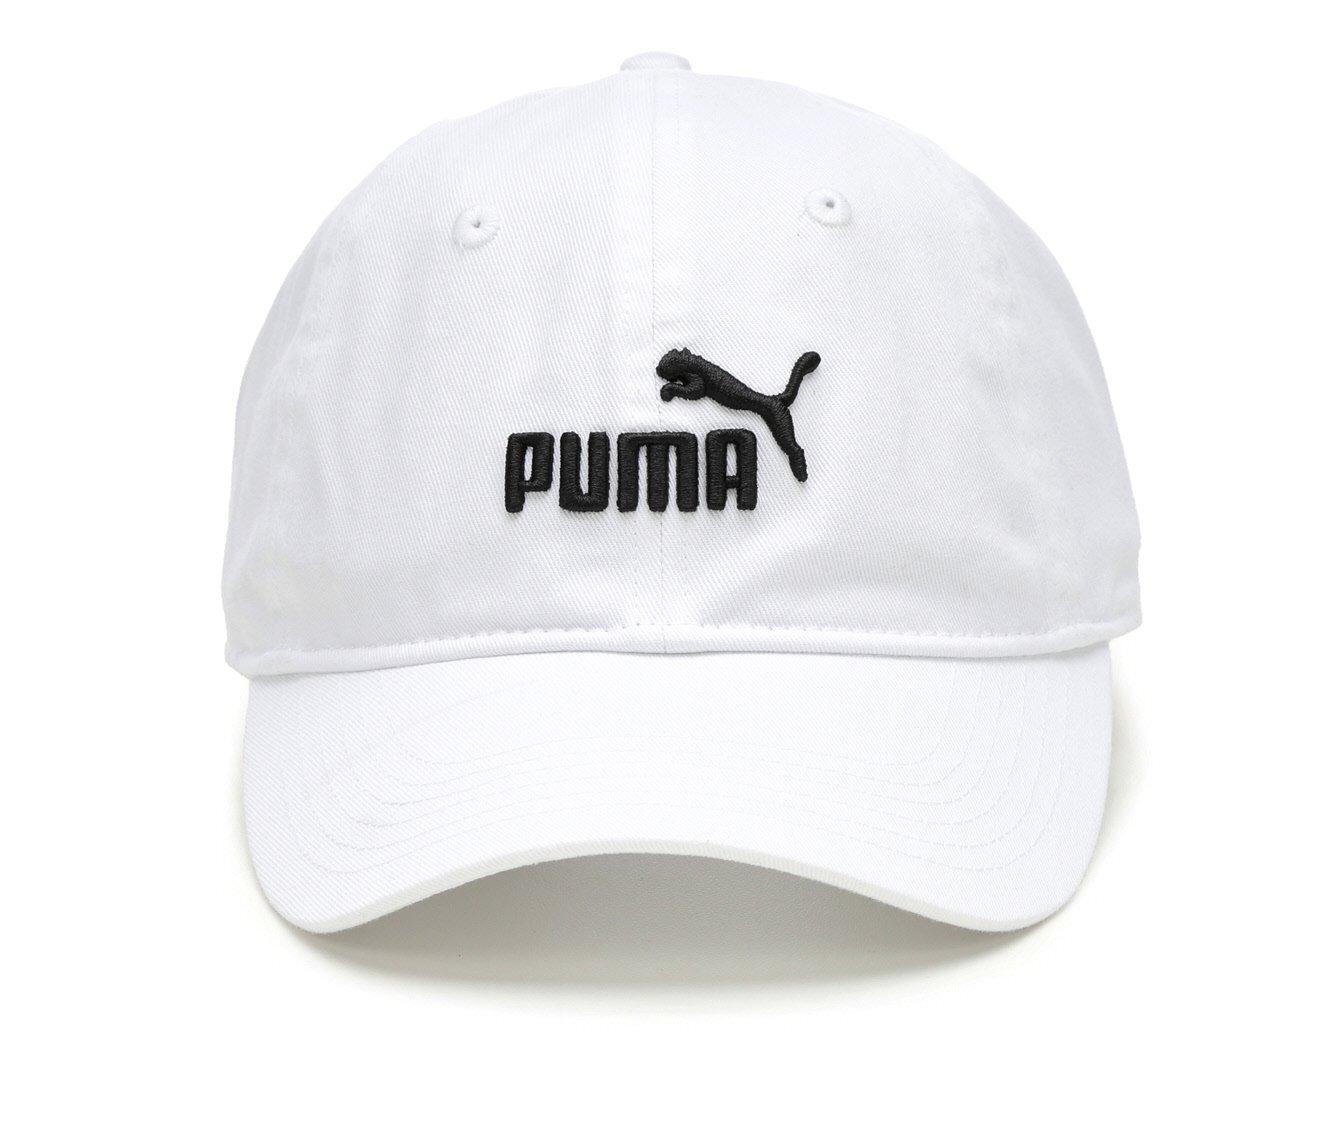 Puma Women's Archive 1 Adjustable Cap